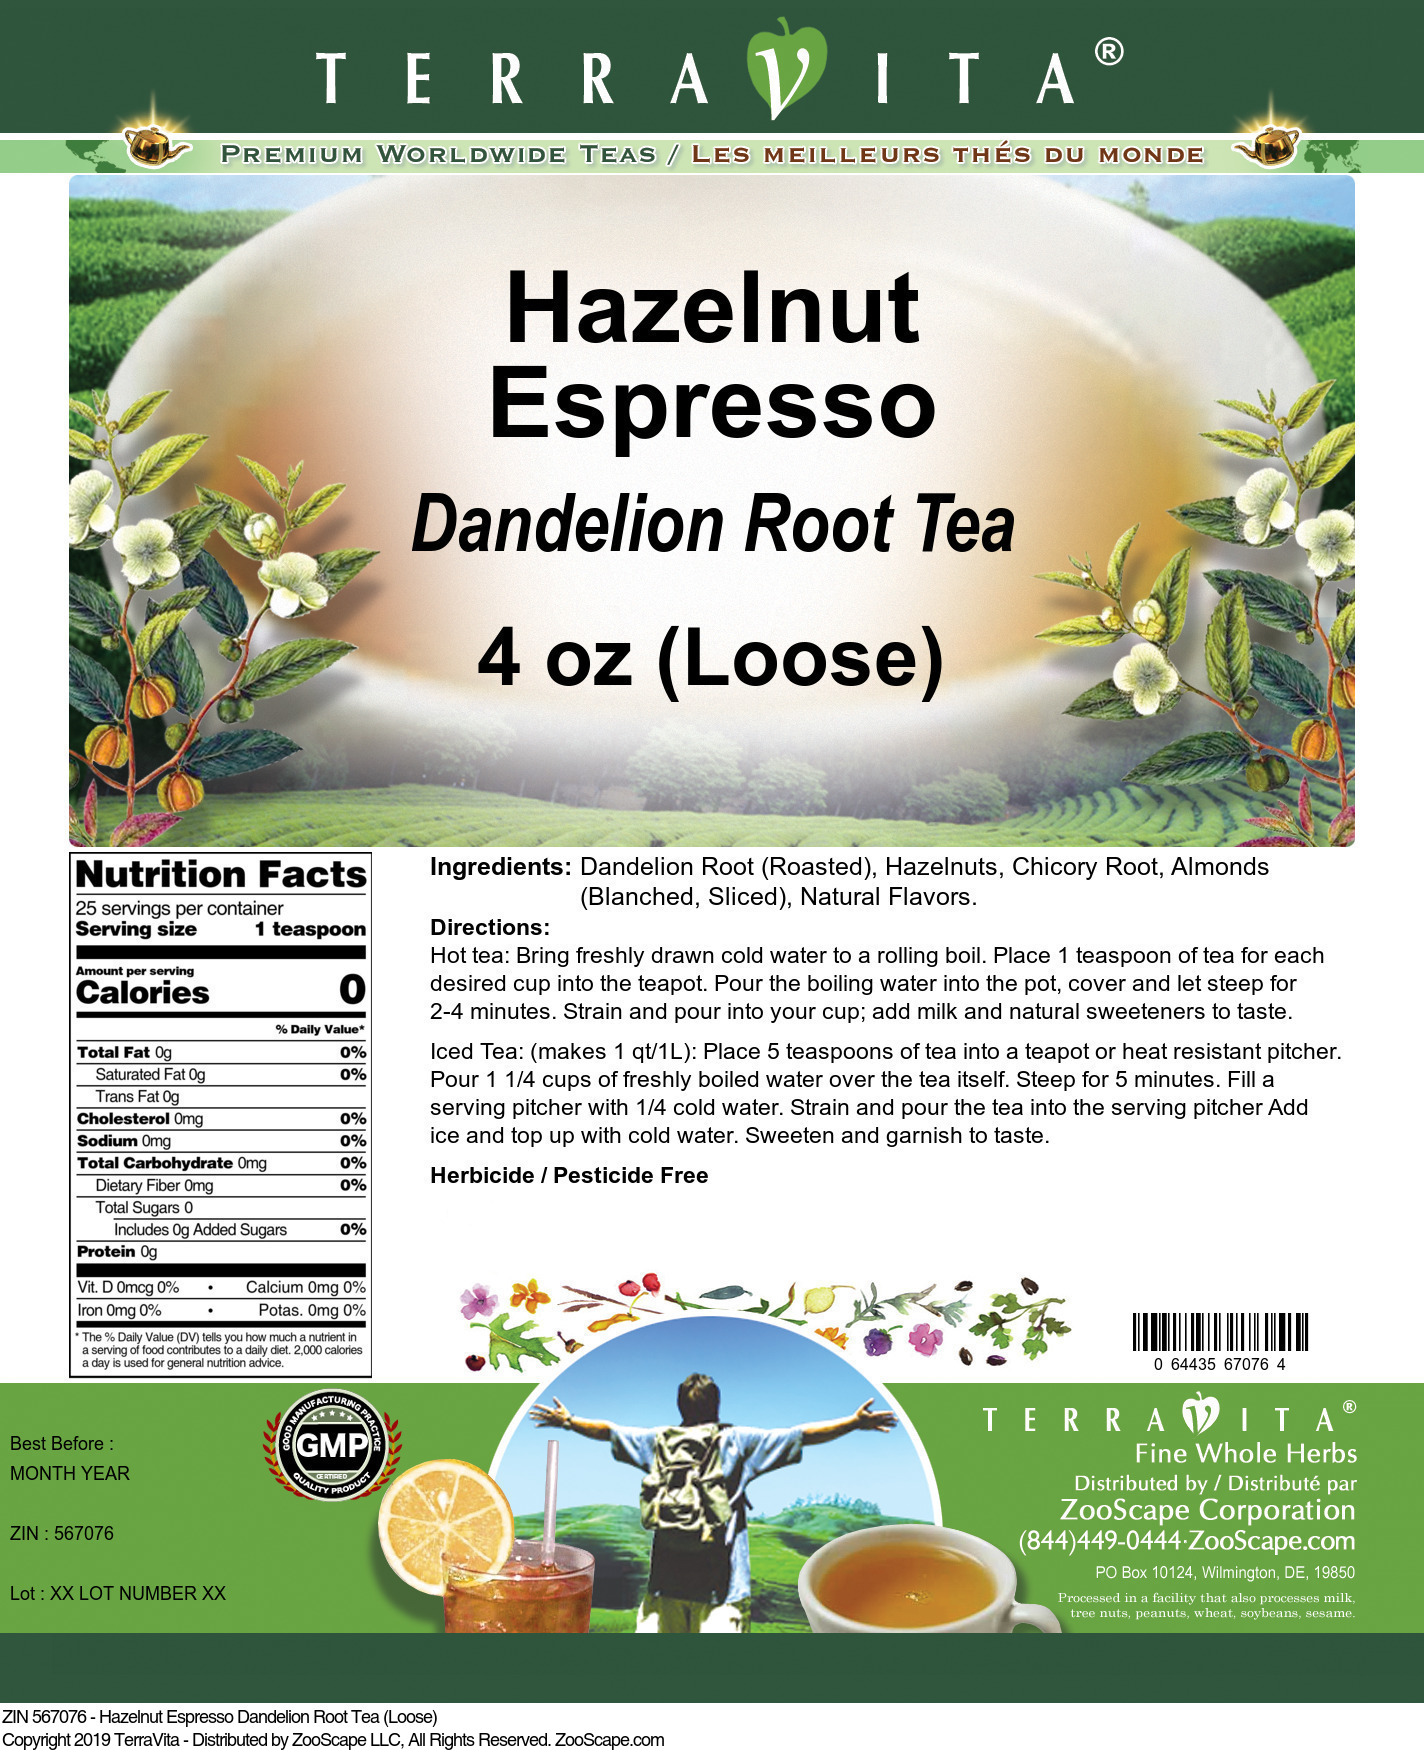 Hazelnut Espresso Dandelion Root Tea (Loose) - Label